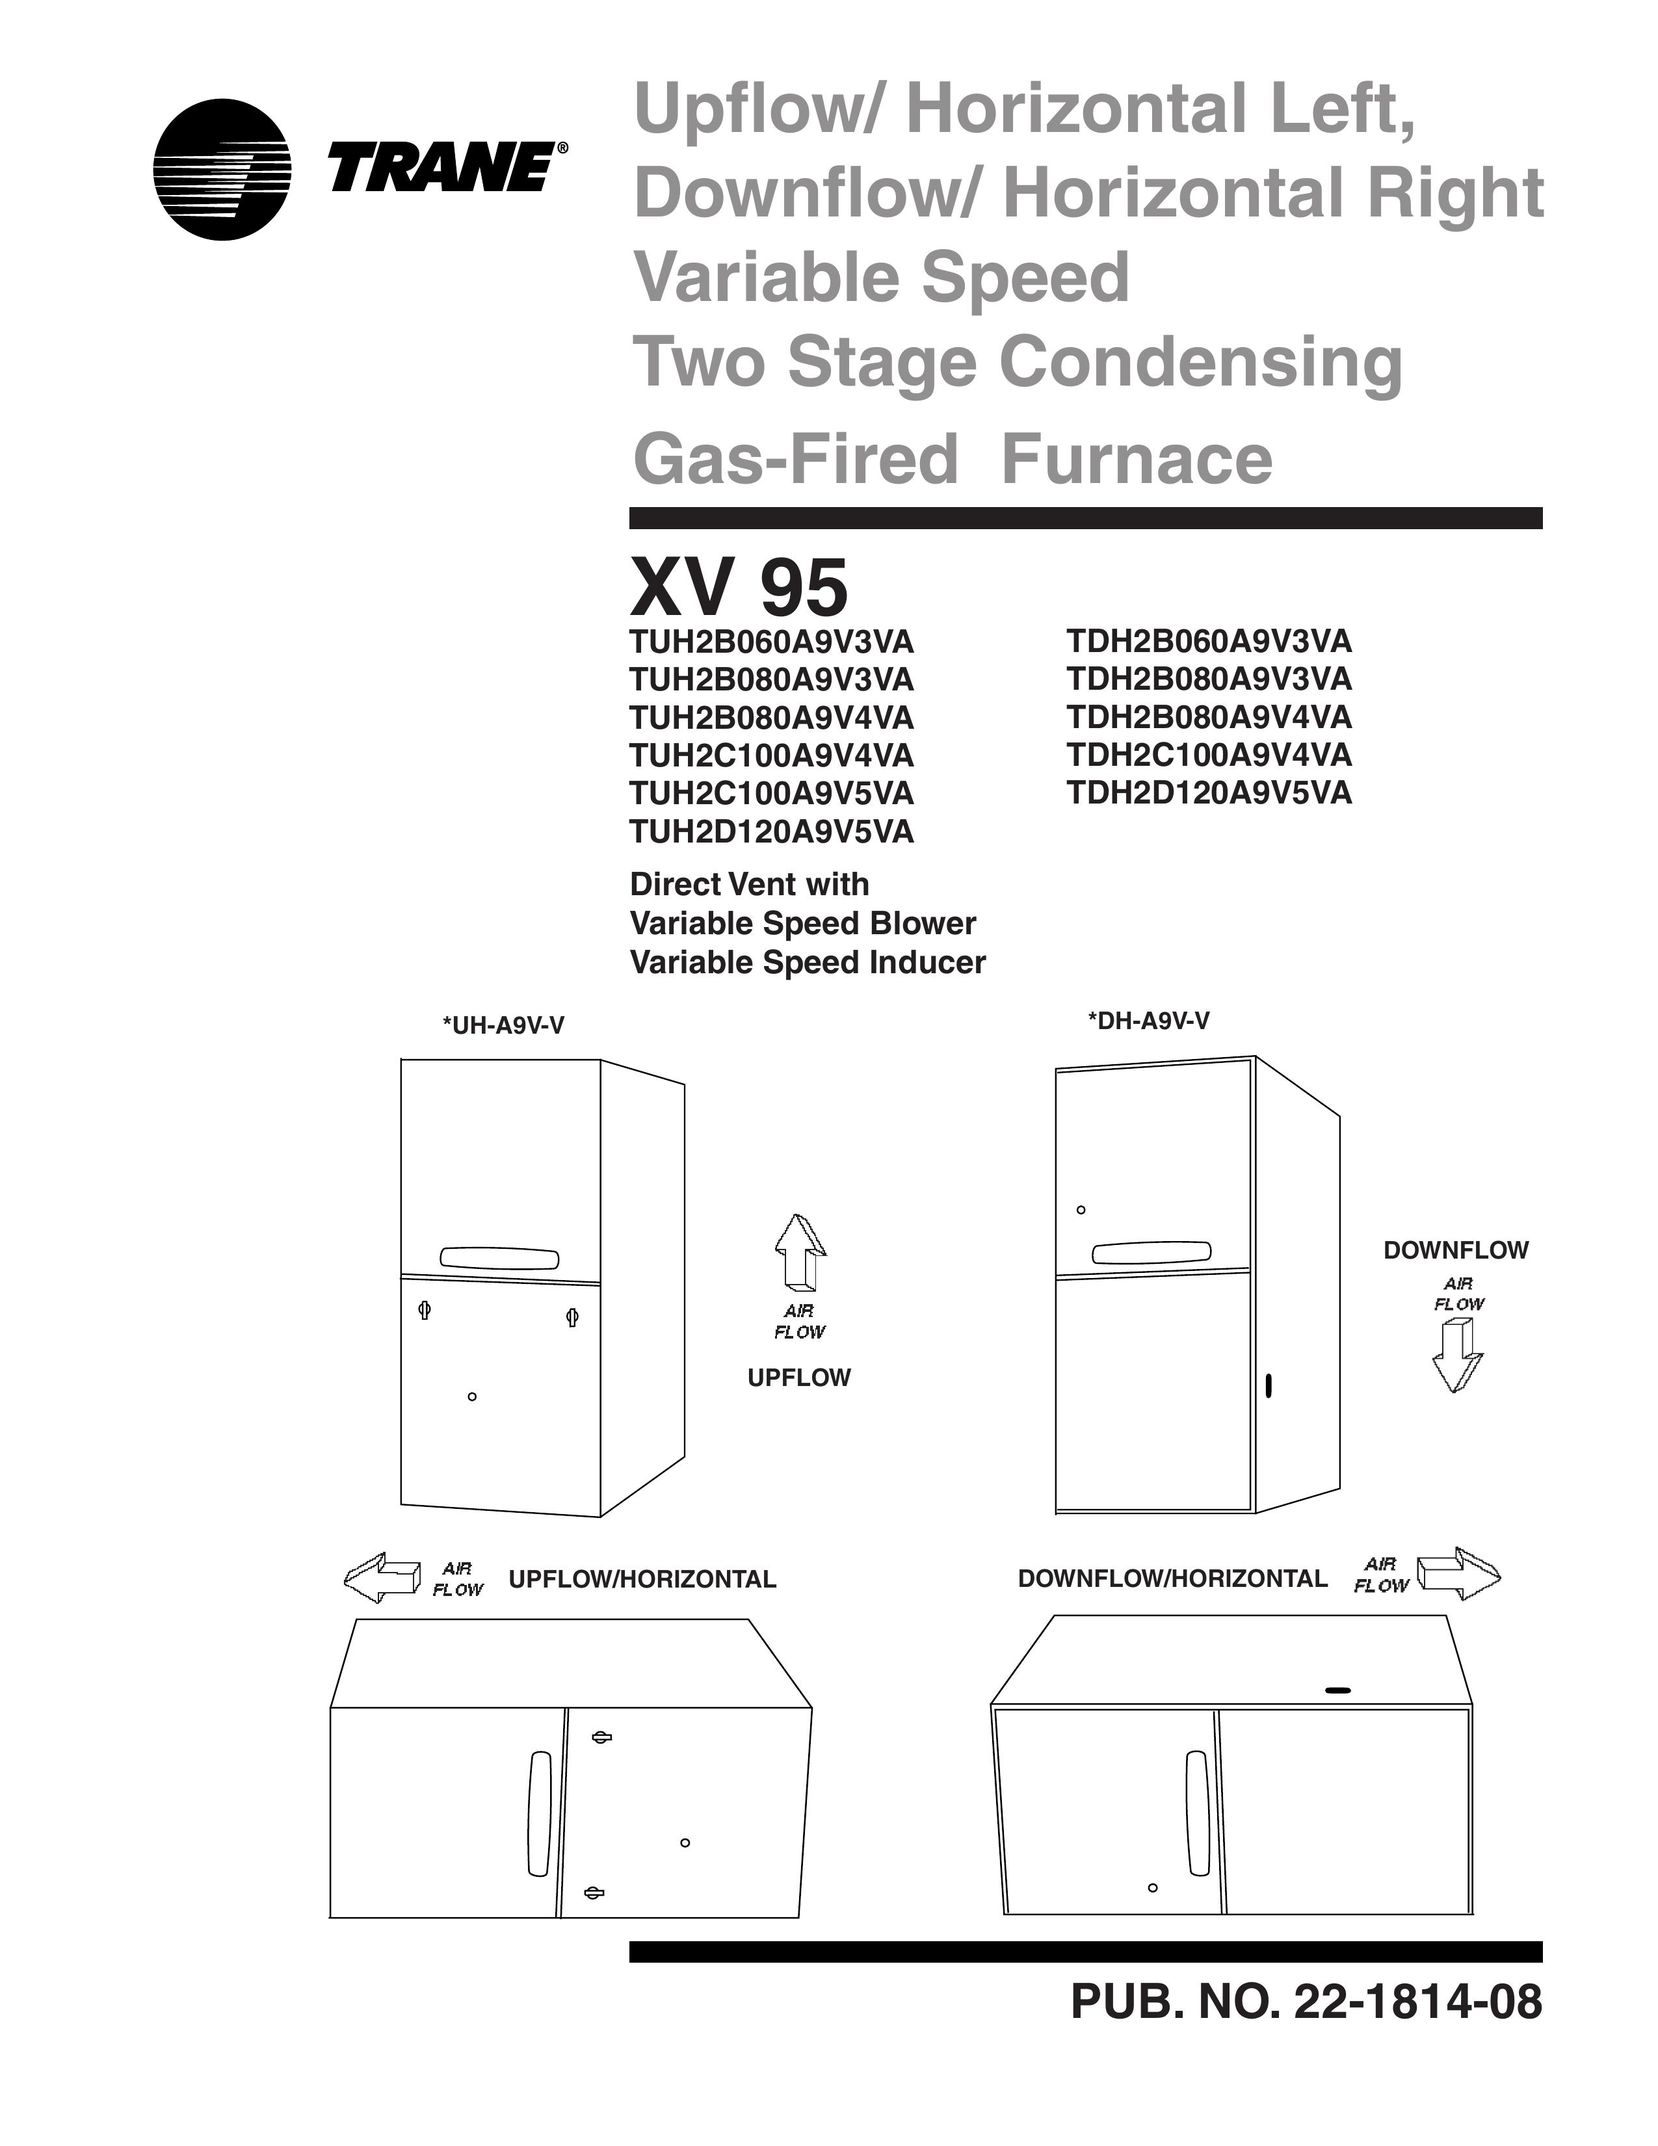 Trane TDH2C100A9V4VA Furnace User Manual